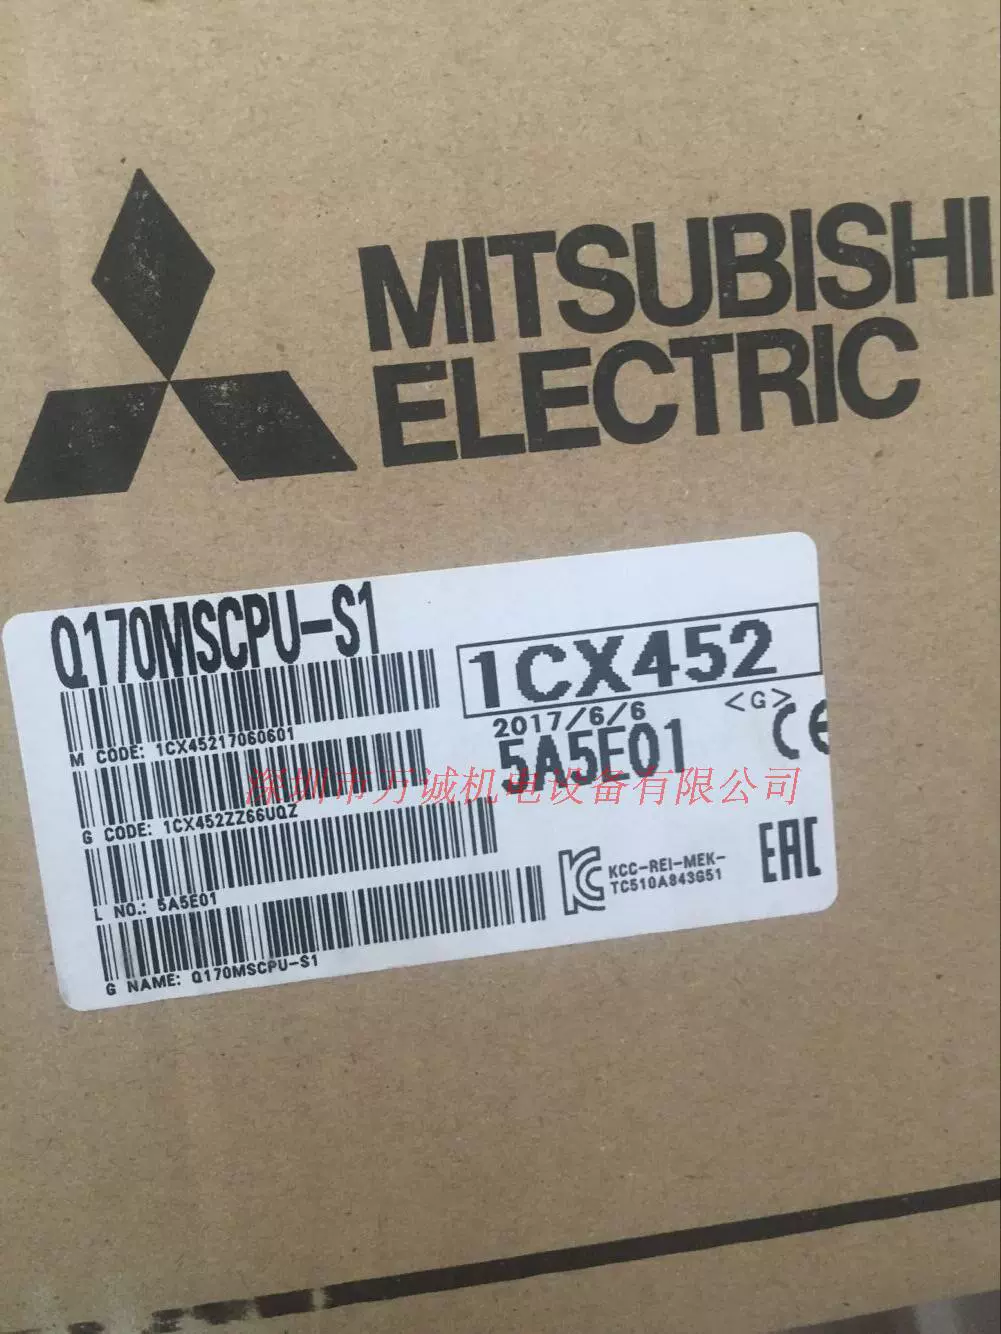 正規販売店】 MITSUBISHI 新品 三菱電機 保証 Q170MSCPU-S1 その他DIY、業務、産業用品